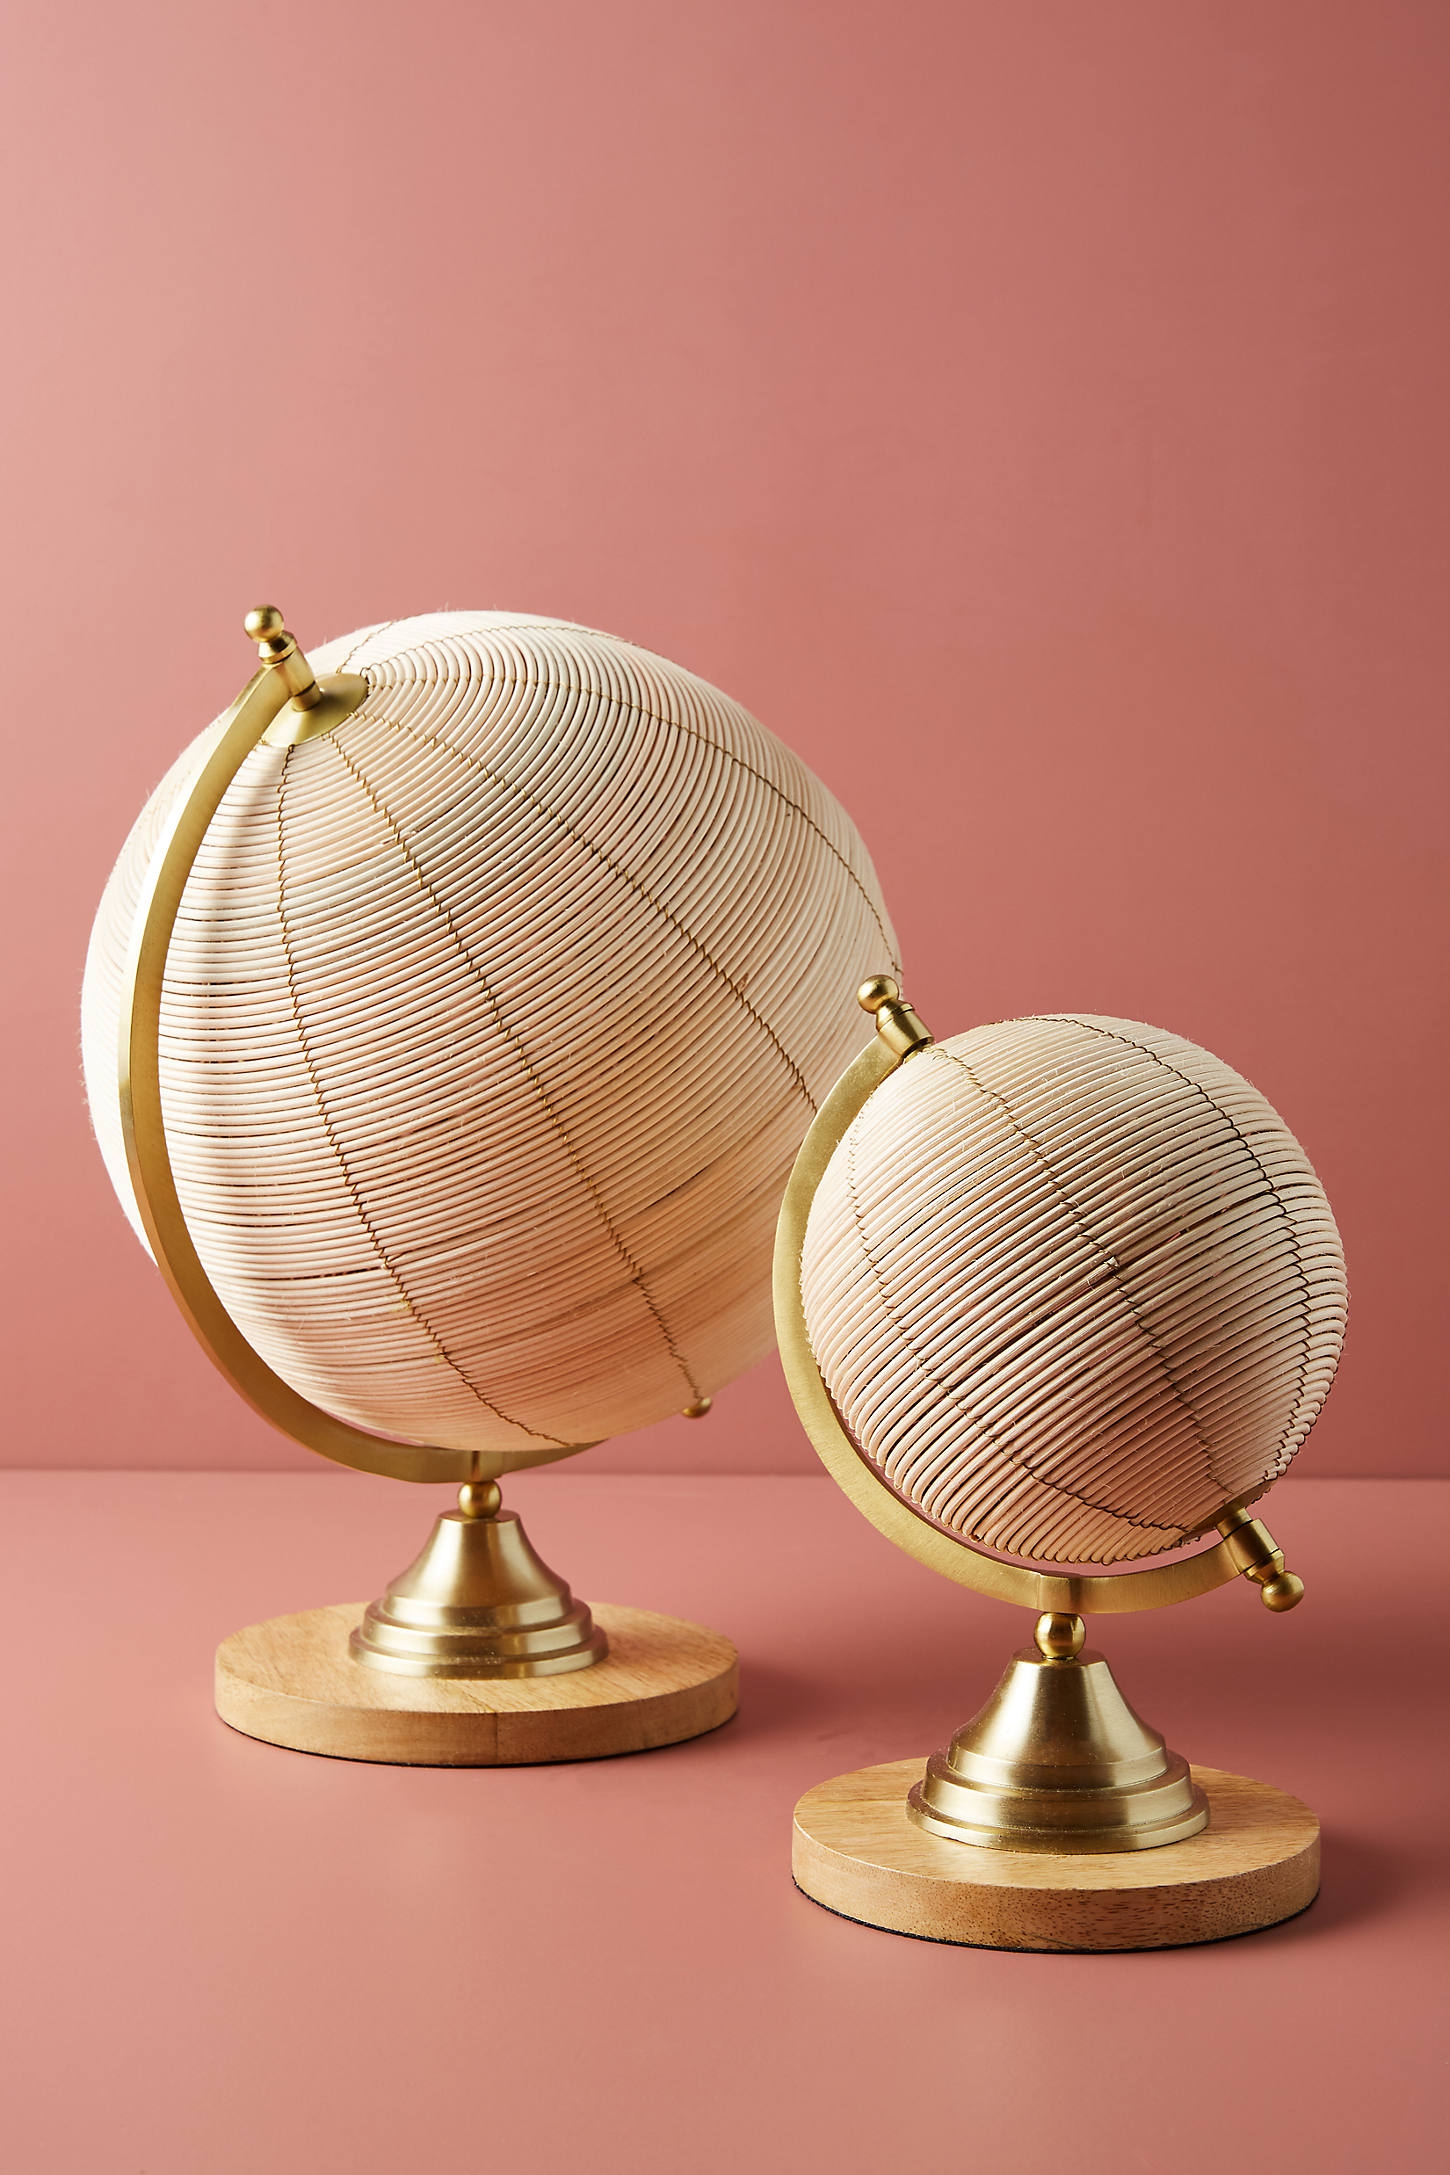 Rattan Globe Decorative Object - Small - Image 0